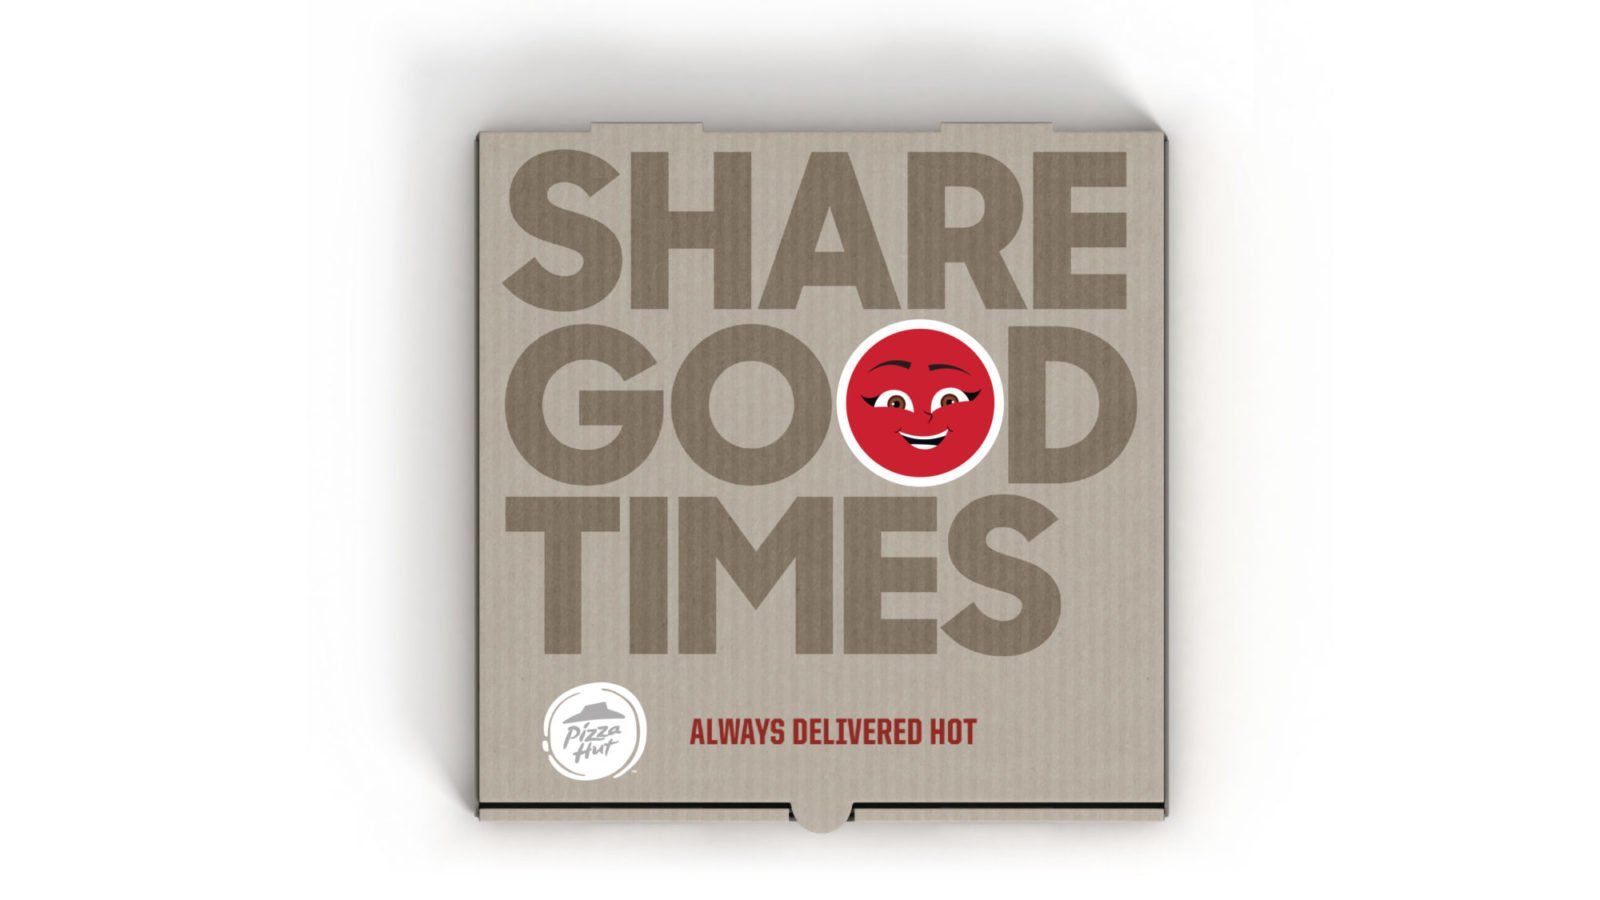 Share good times pizza hut pizza box